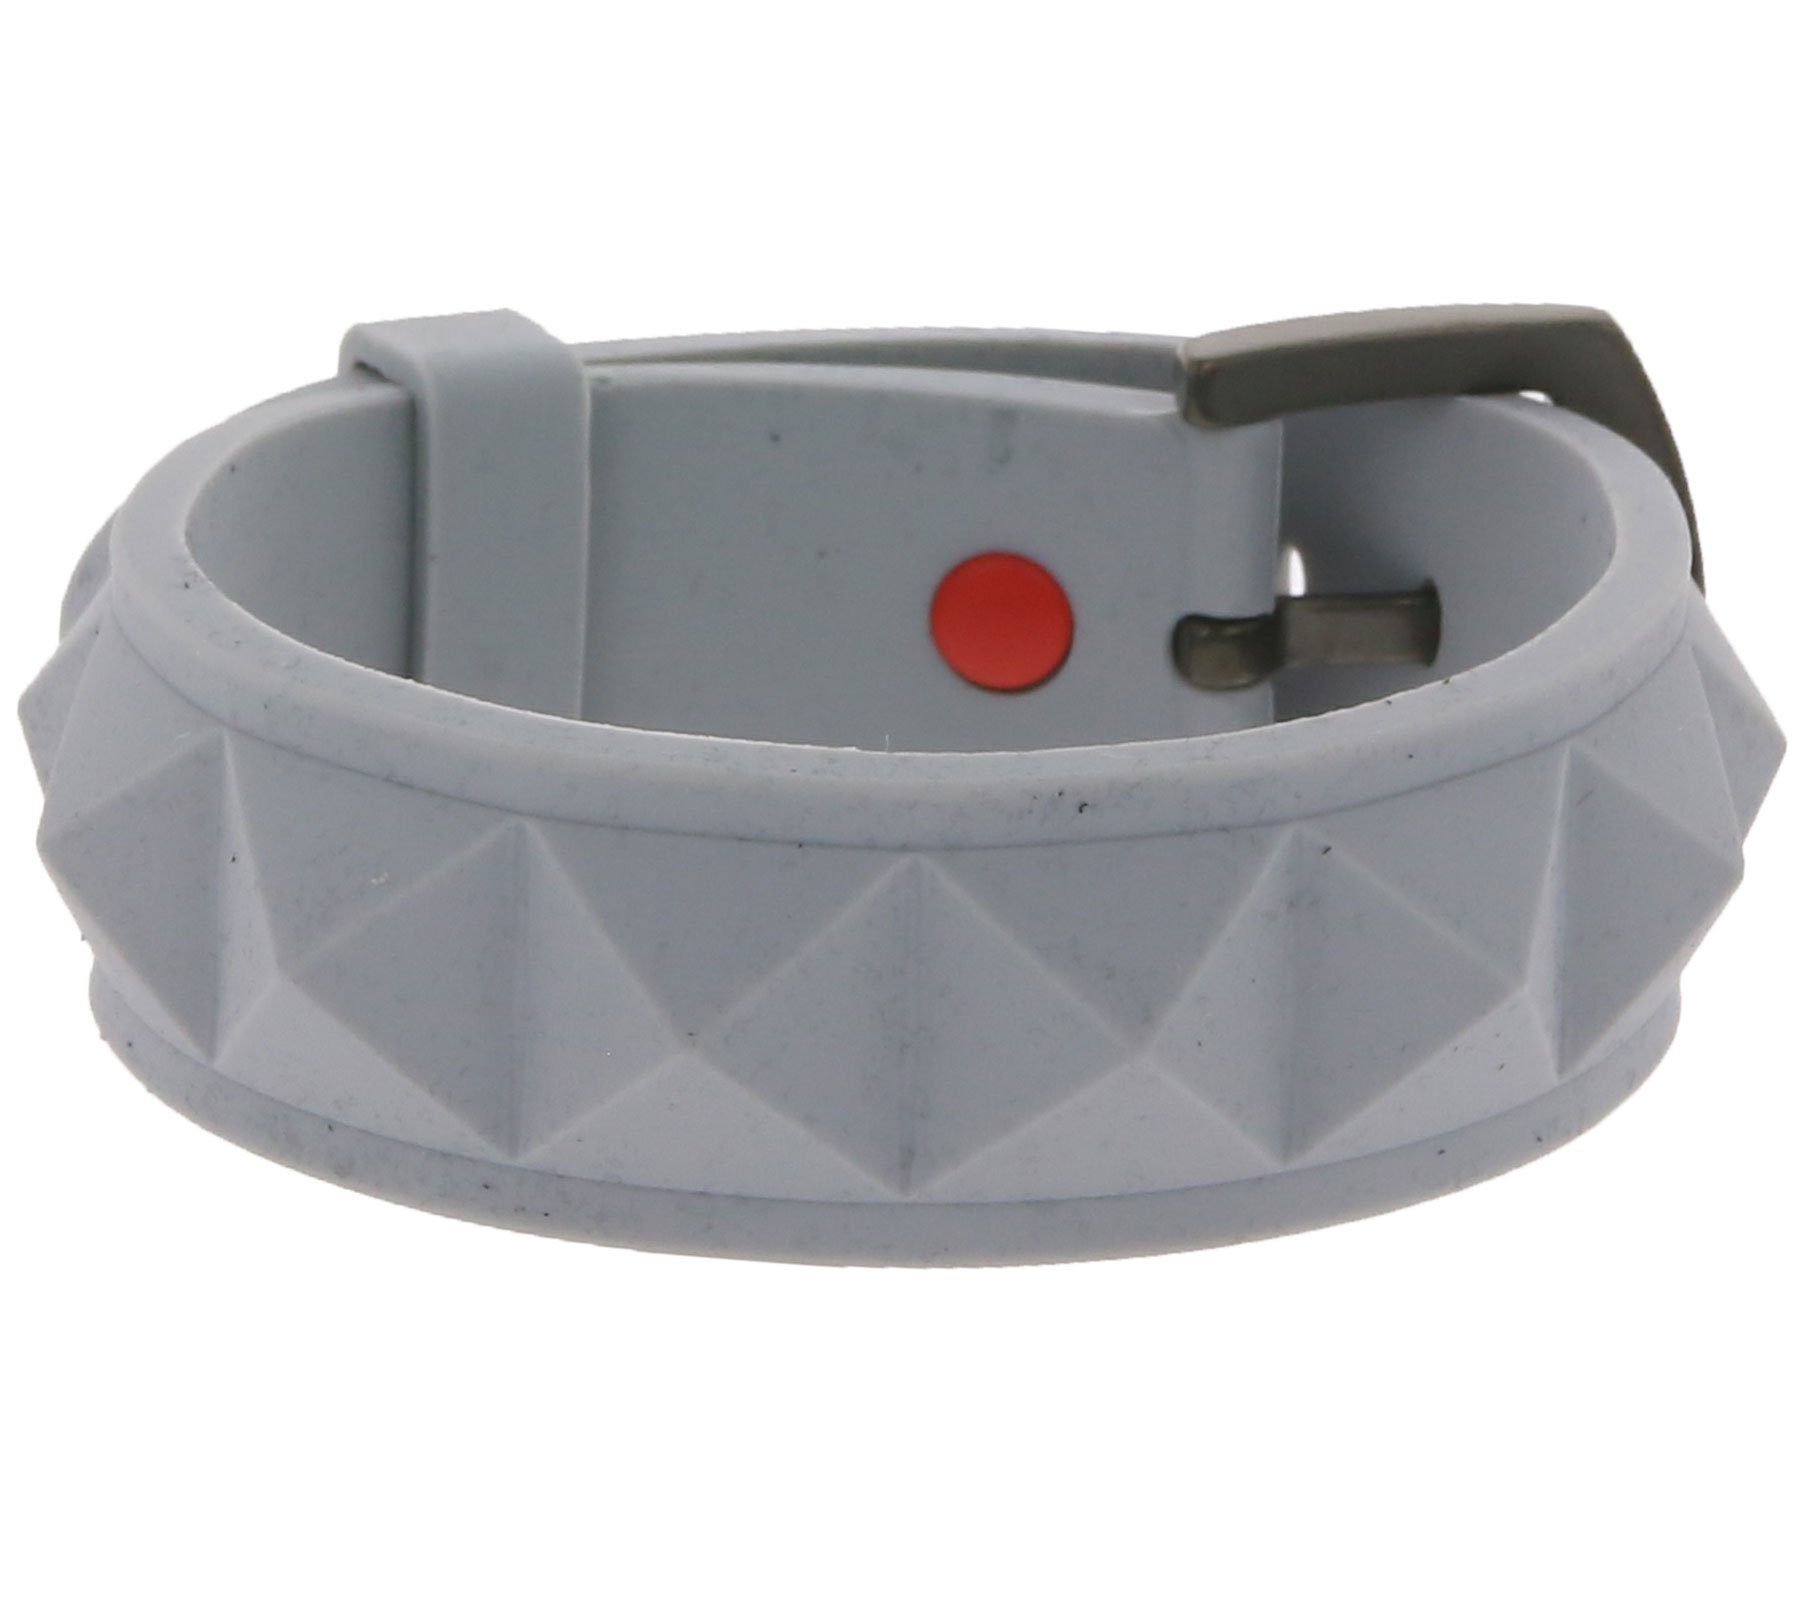 C3 C3 Schnallen-Verschluss Mode-Schmuck Arm-Schmuck mit Silikon-Armband Grau lässiges Armband